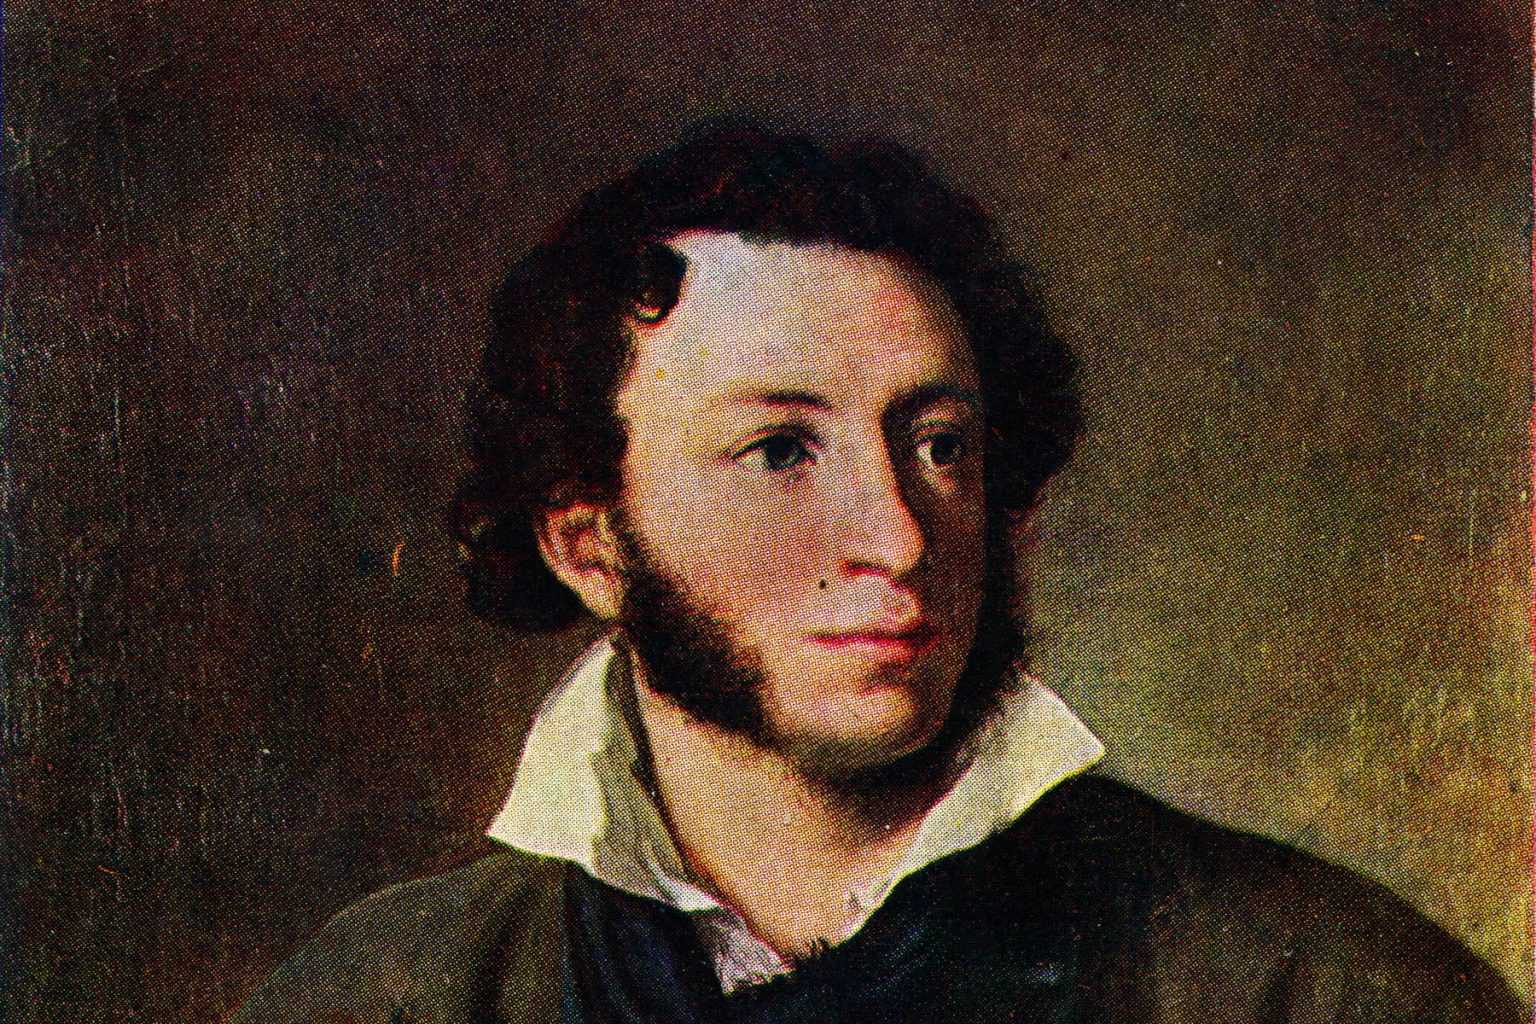 "19 октября 1825", пушкин, александр сергеевич — поэзия | творческий портал